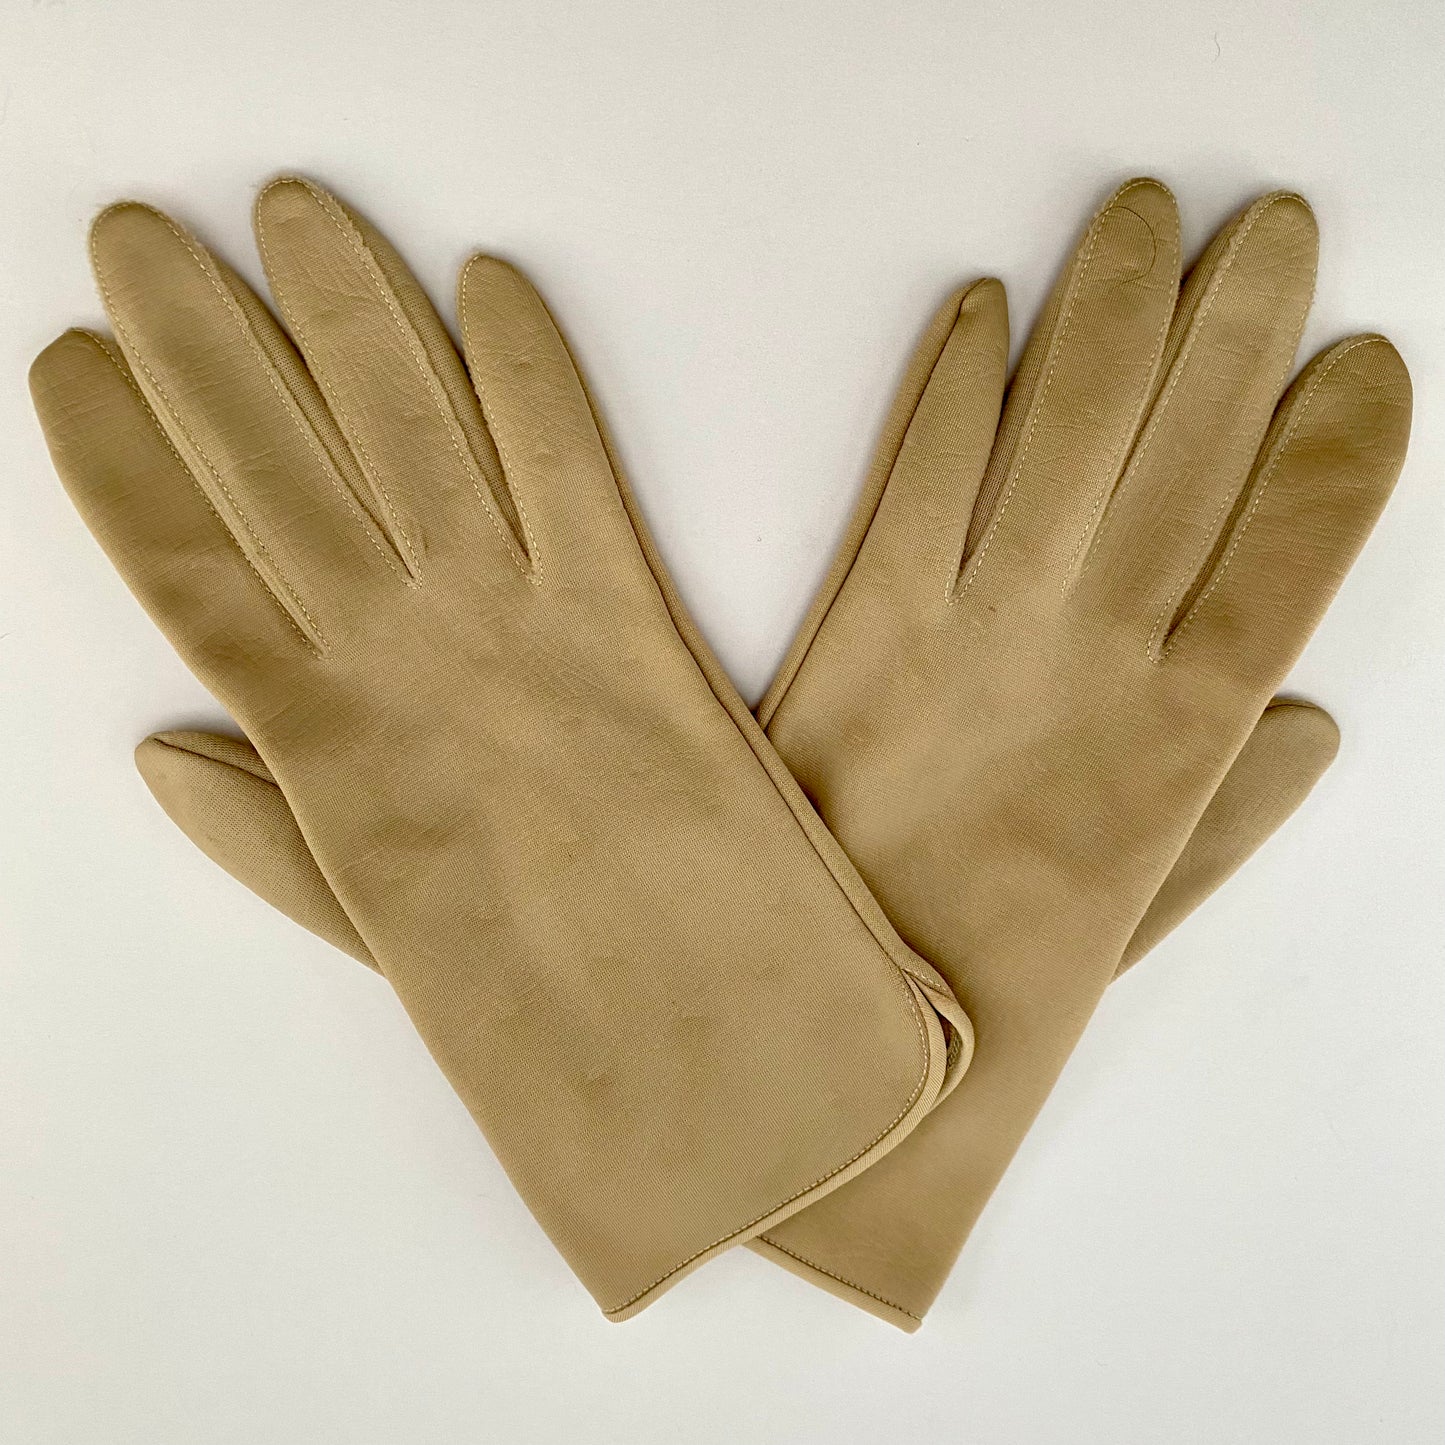 1940s Utah Tailoring Mills Coat with Hanson Matching Gloves.